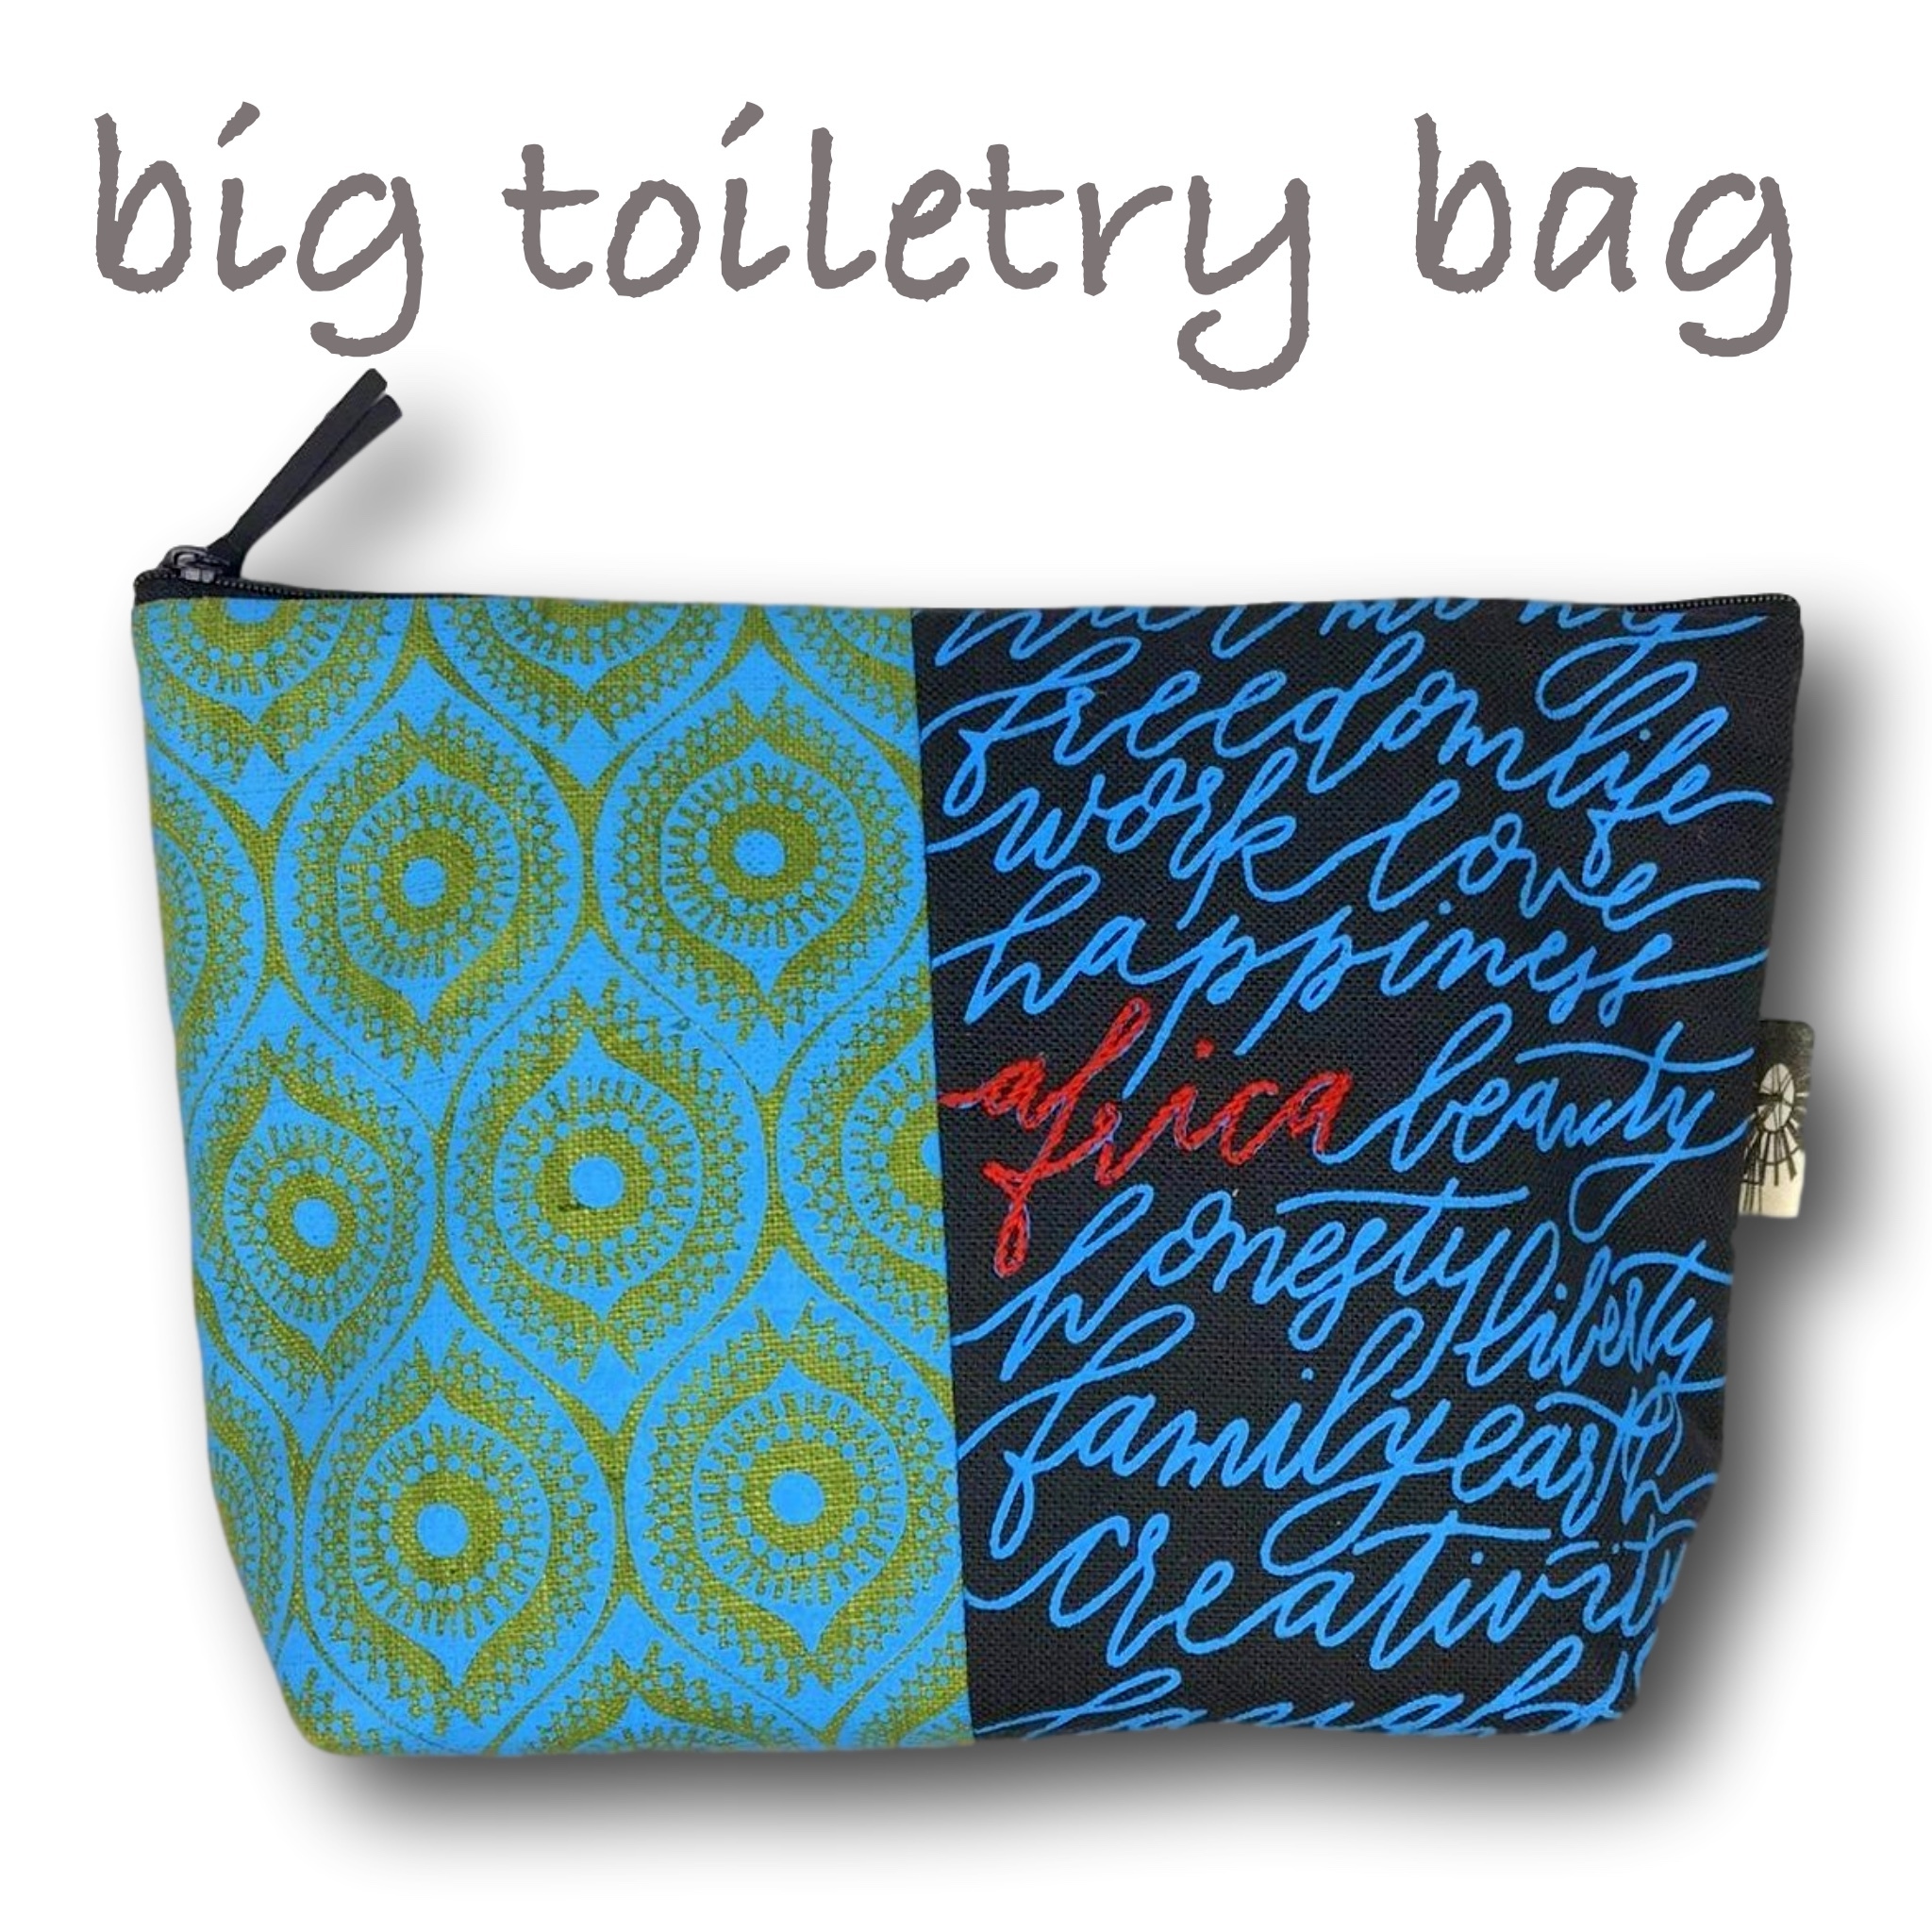 big_toiletry_bag